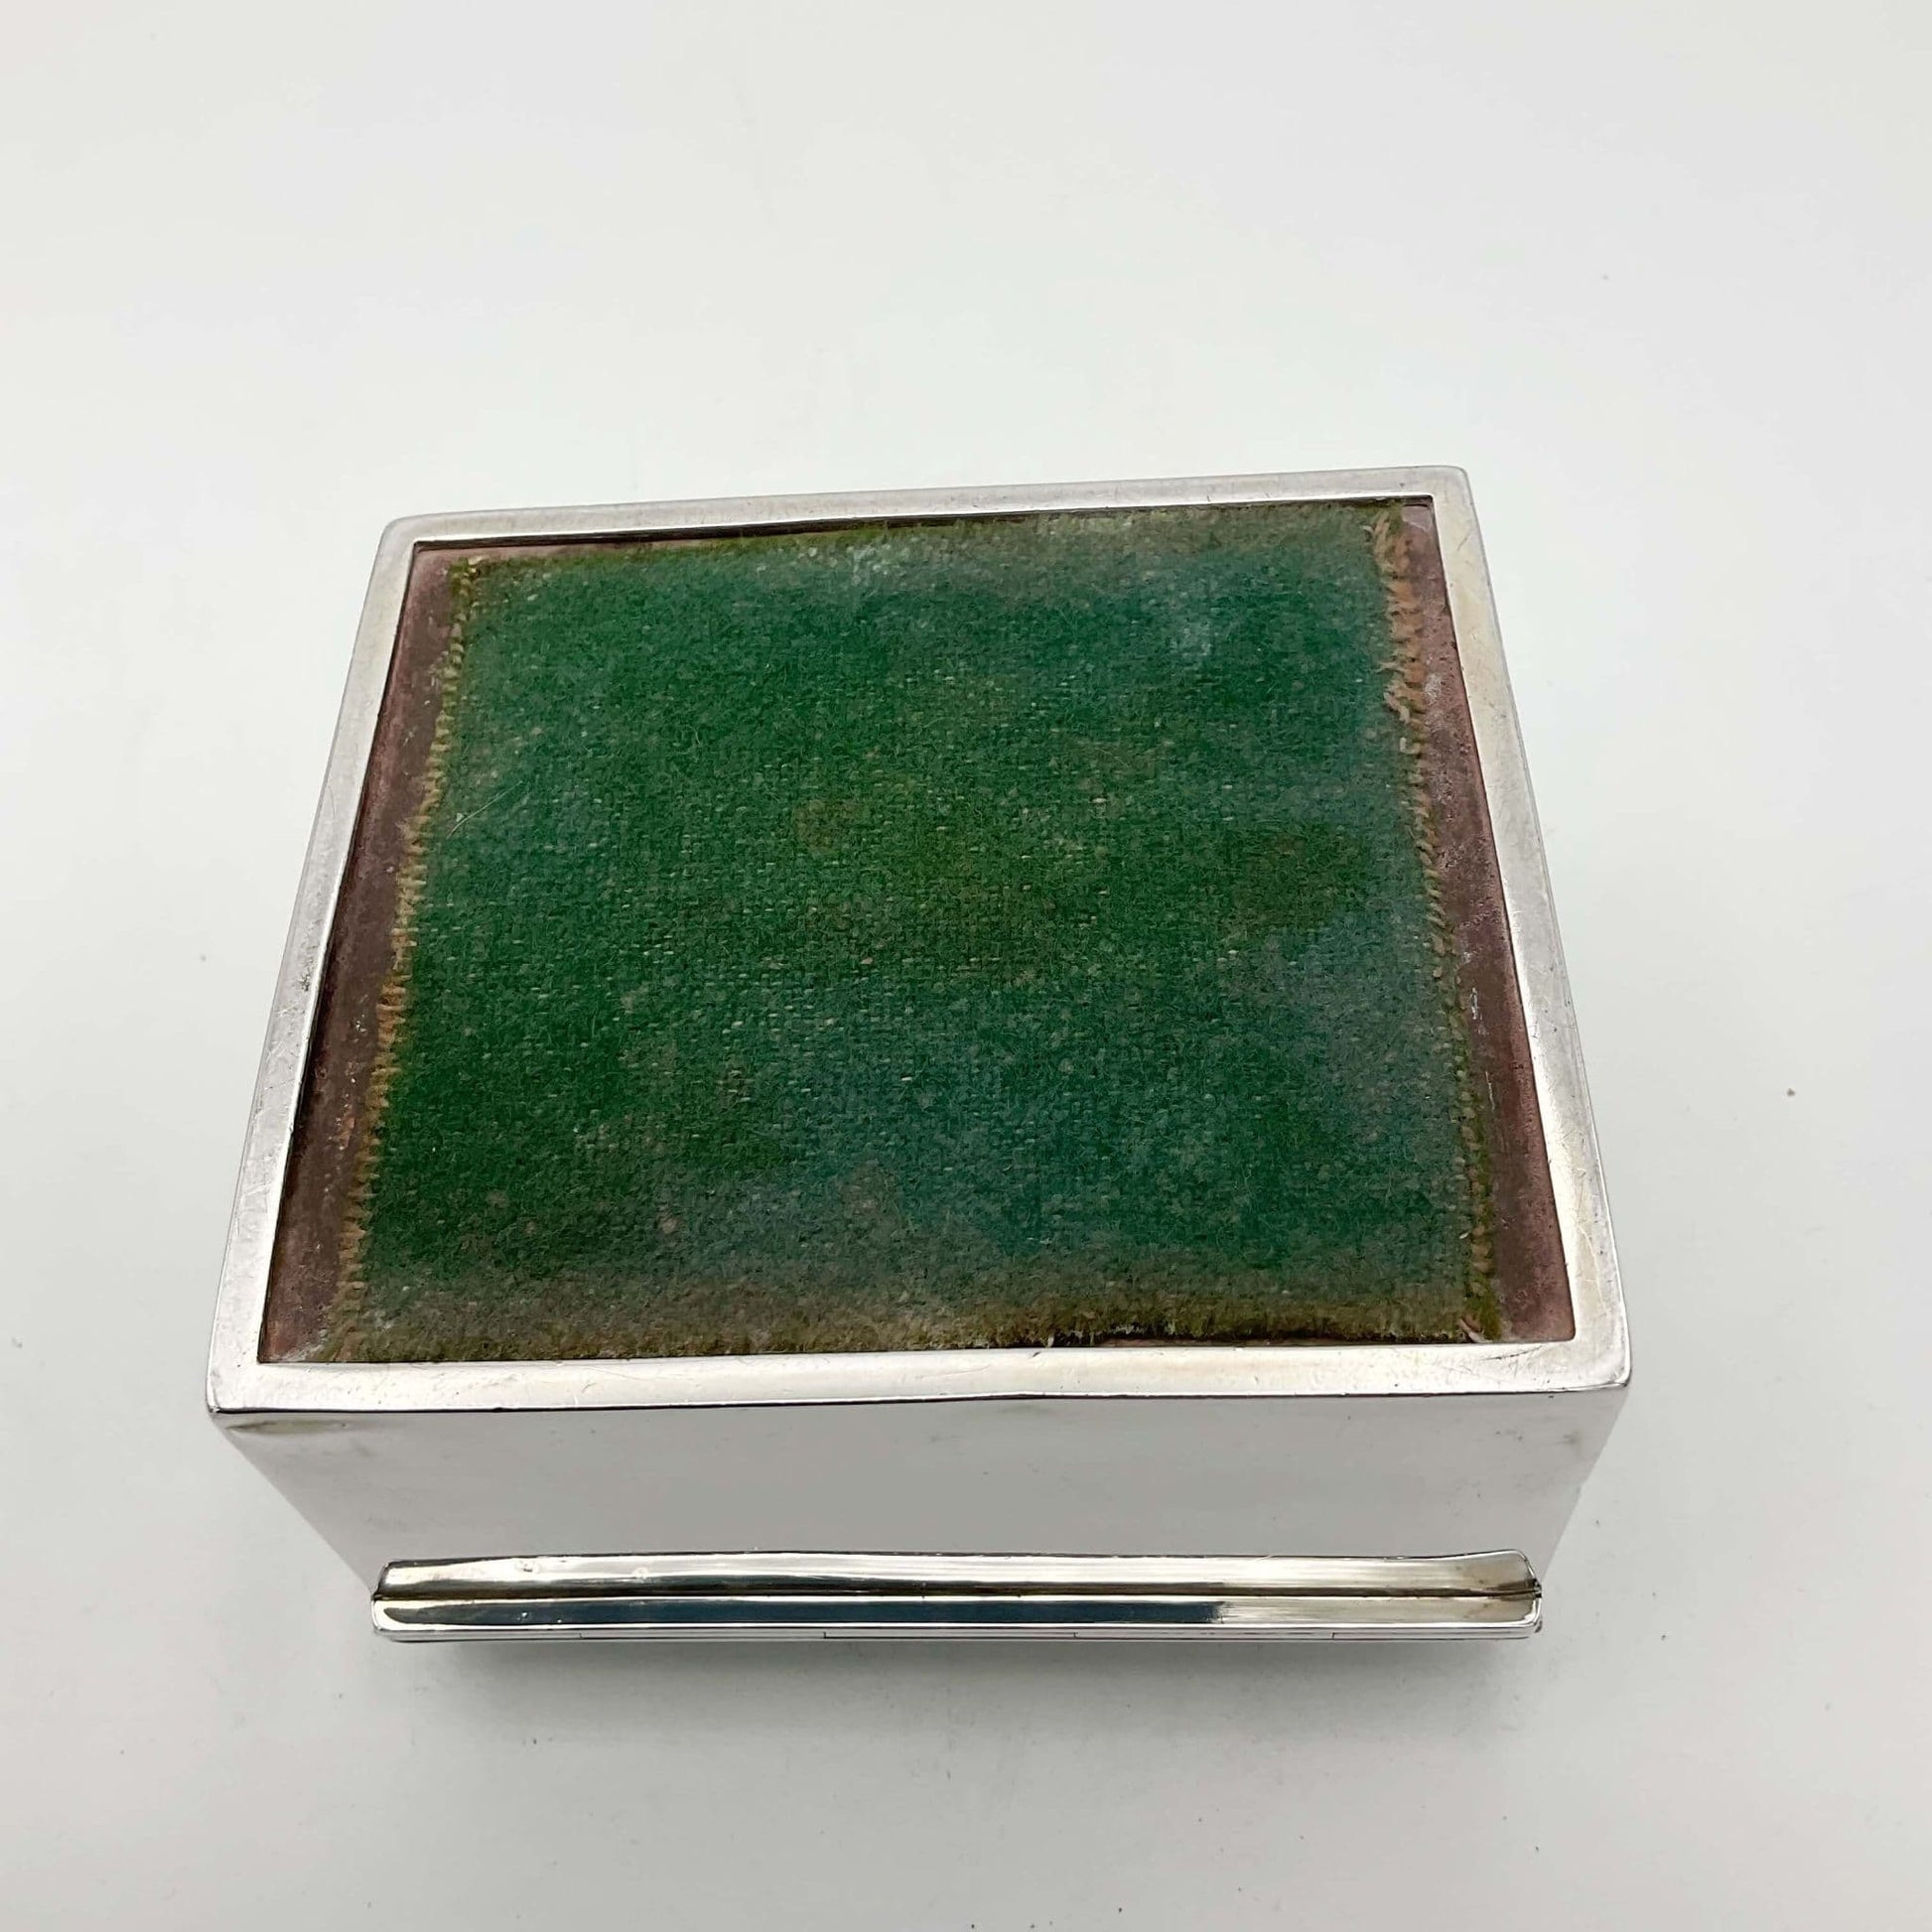 Base of Antique Edwardian Silver Cigarette Box showing green felt